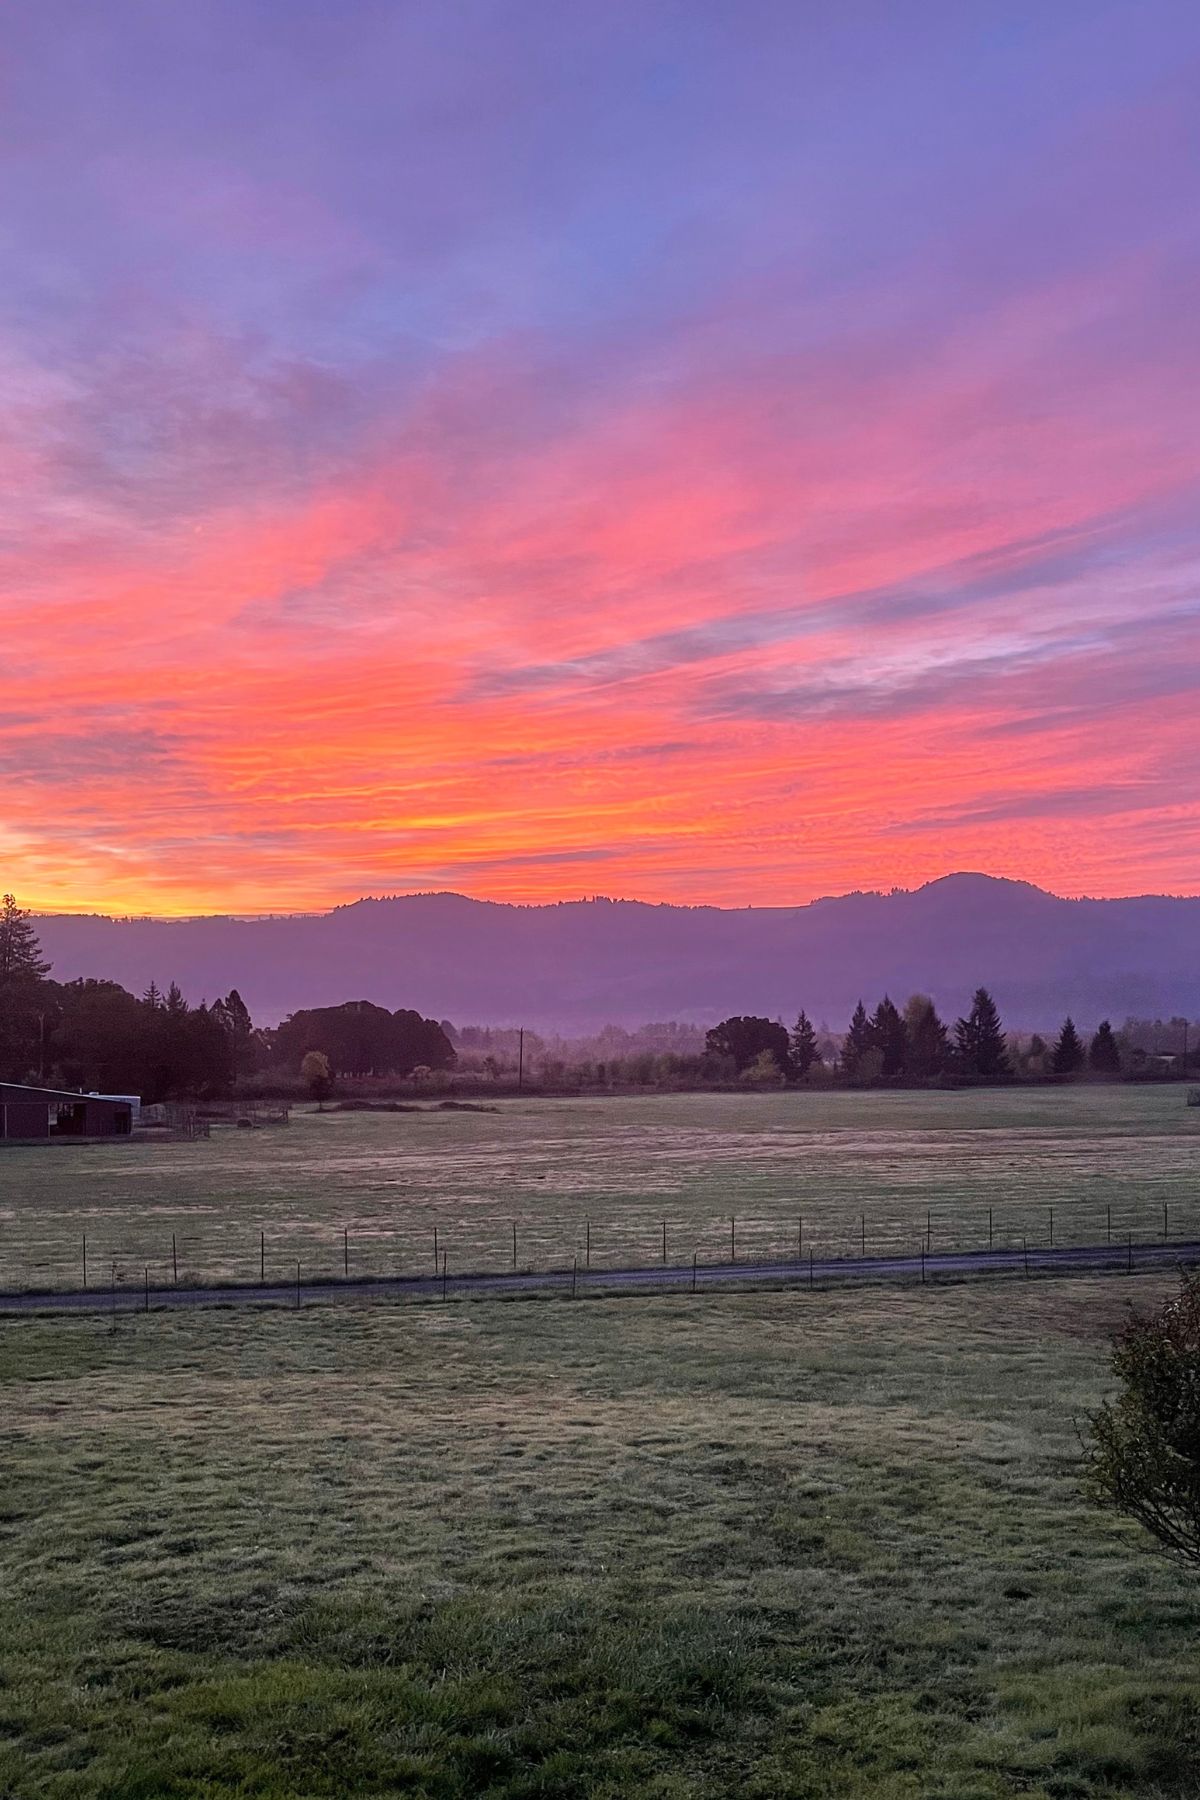 pink-orange sunrise over the hills